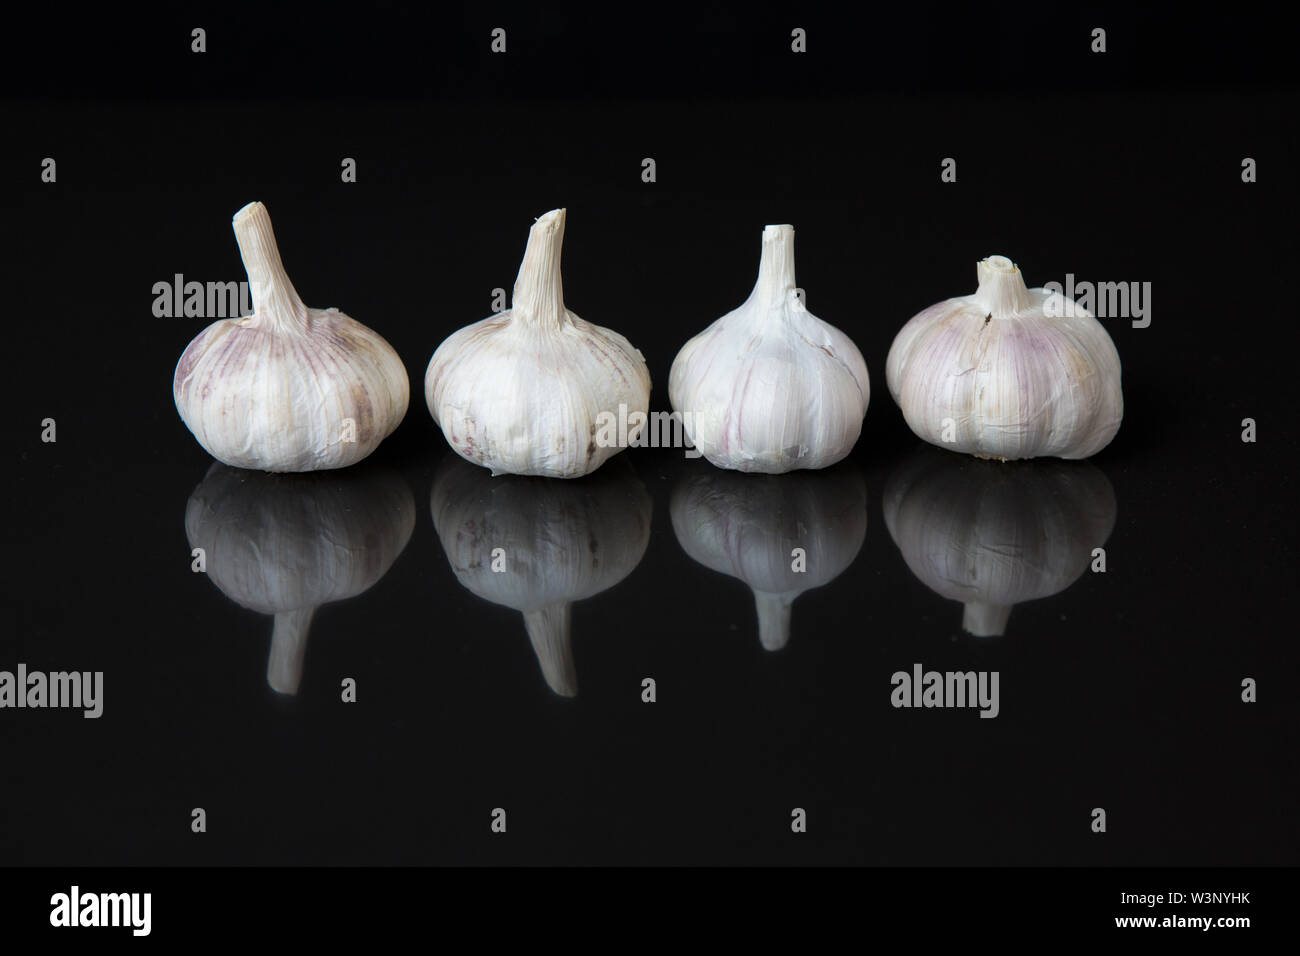 Garlic with reflection on black Stock Photo